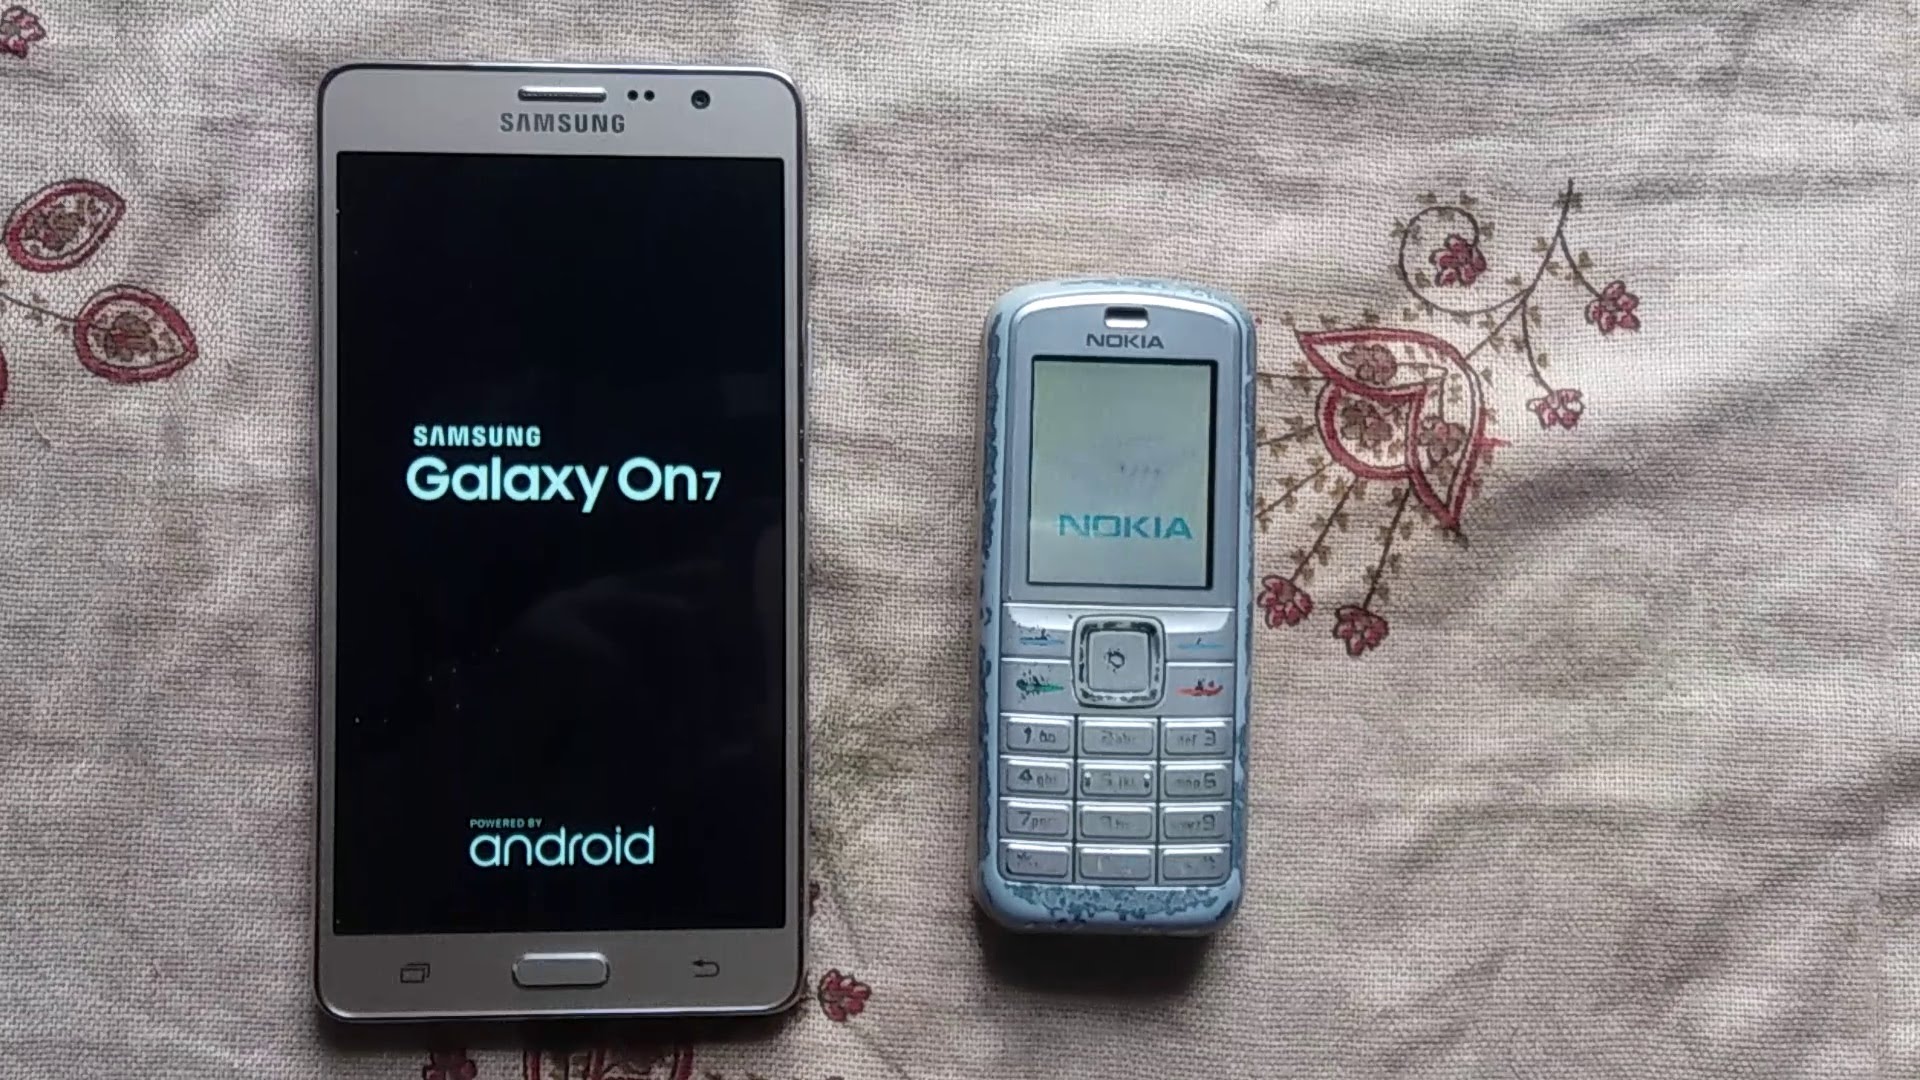 Samsung Galaxy On7 vs Nokia 6070 Speed Test - YouTube